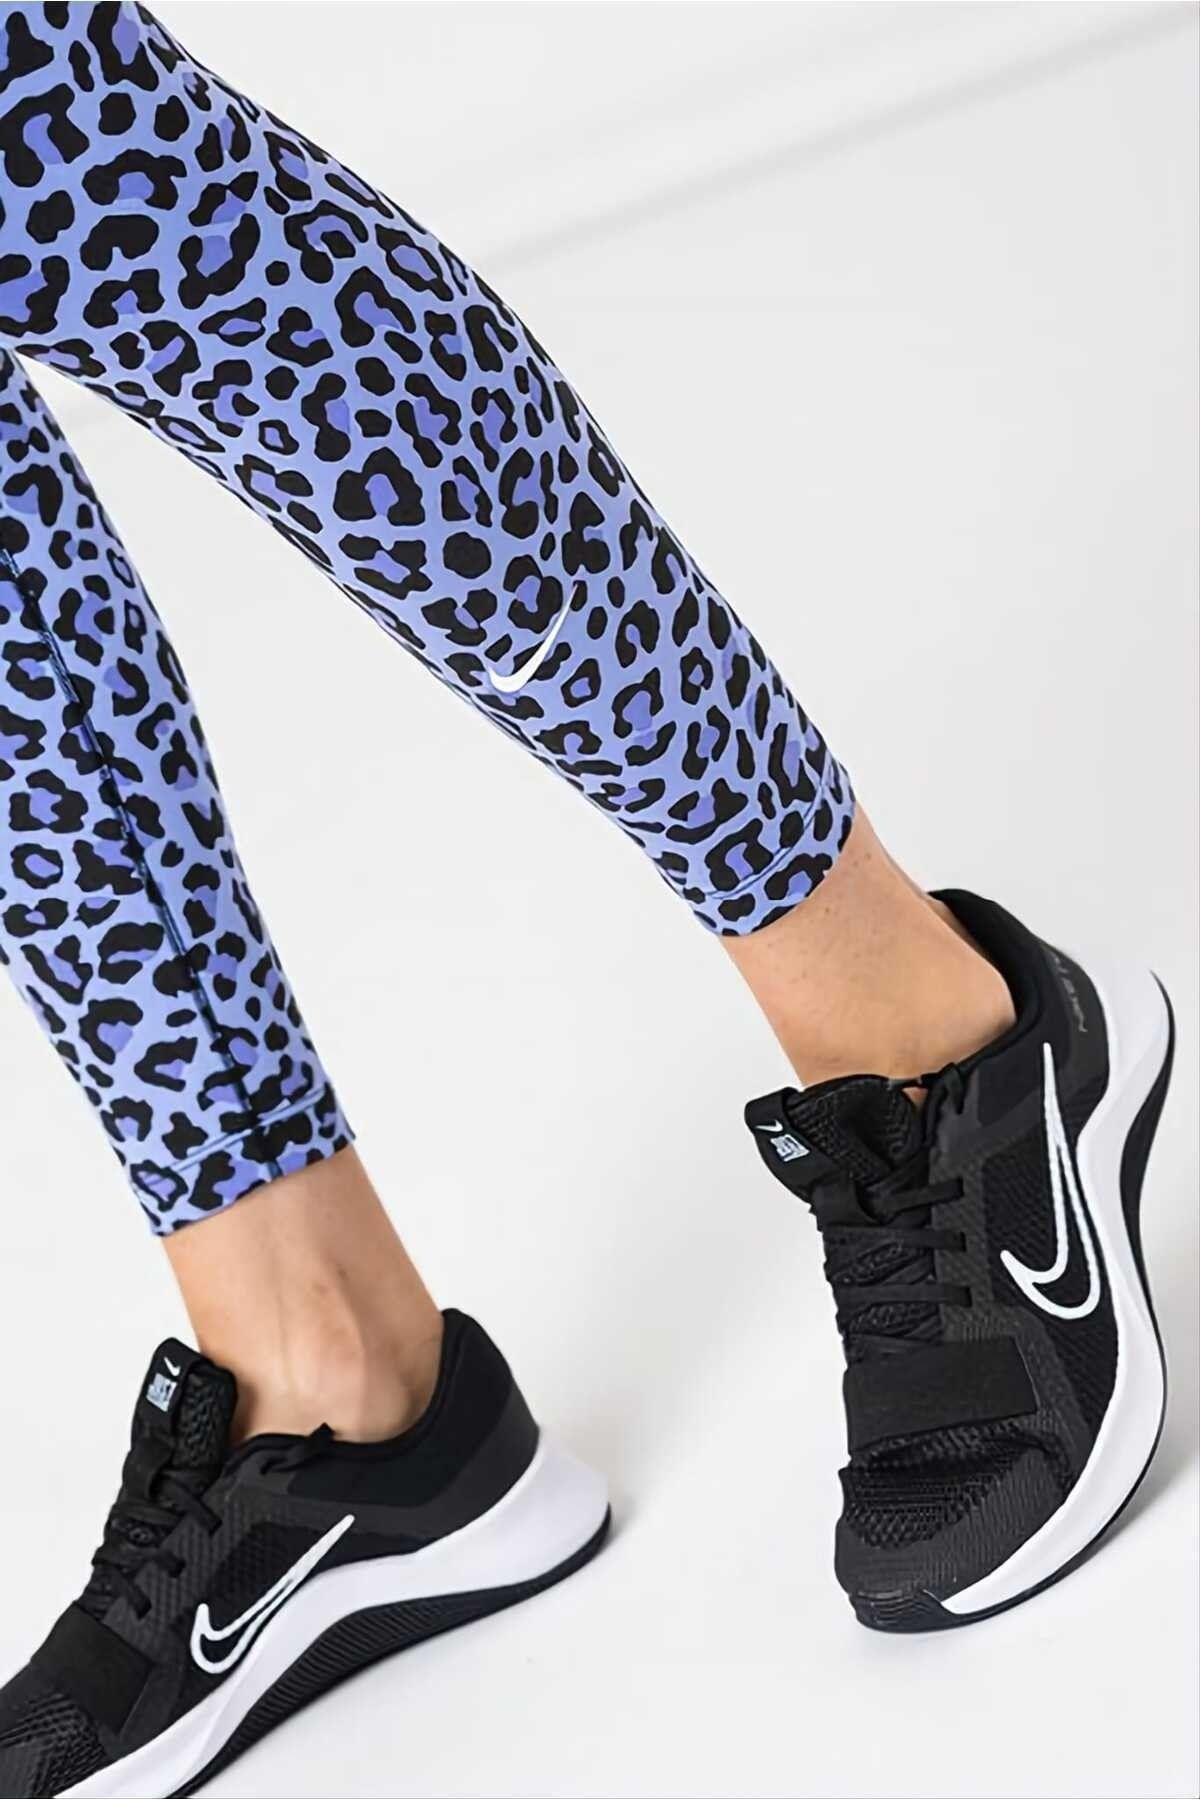 Nike Mallas Mujer - One Leopard (Talla grande) - dark smoke grey